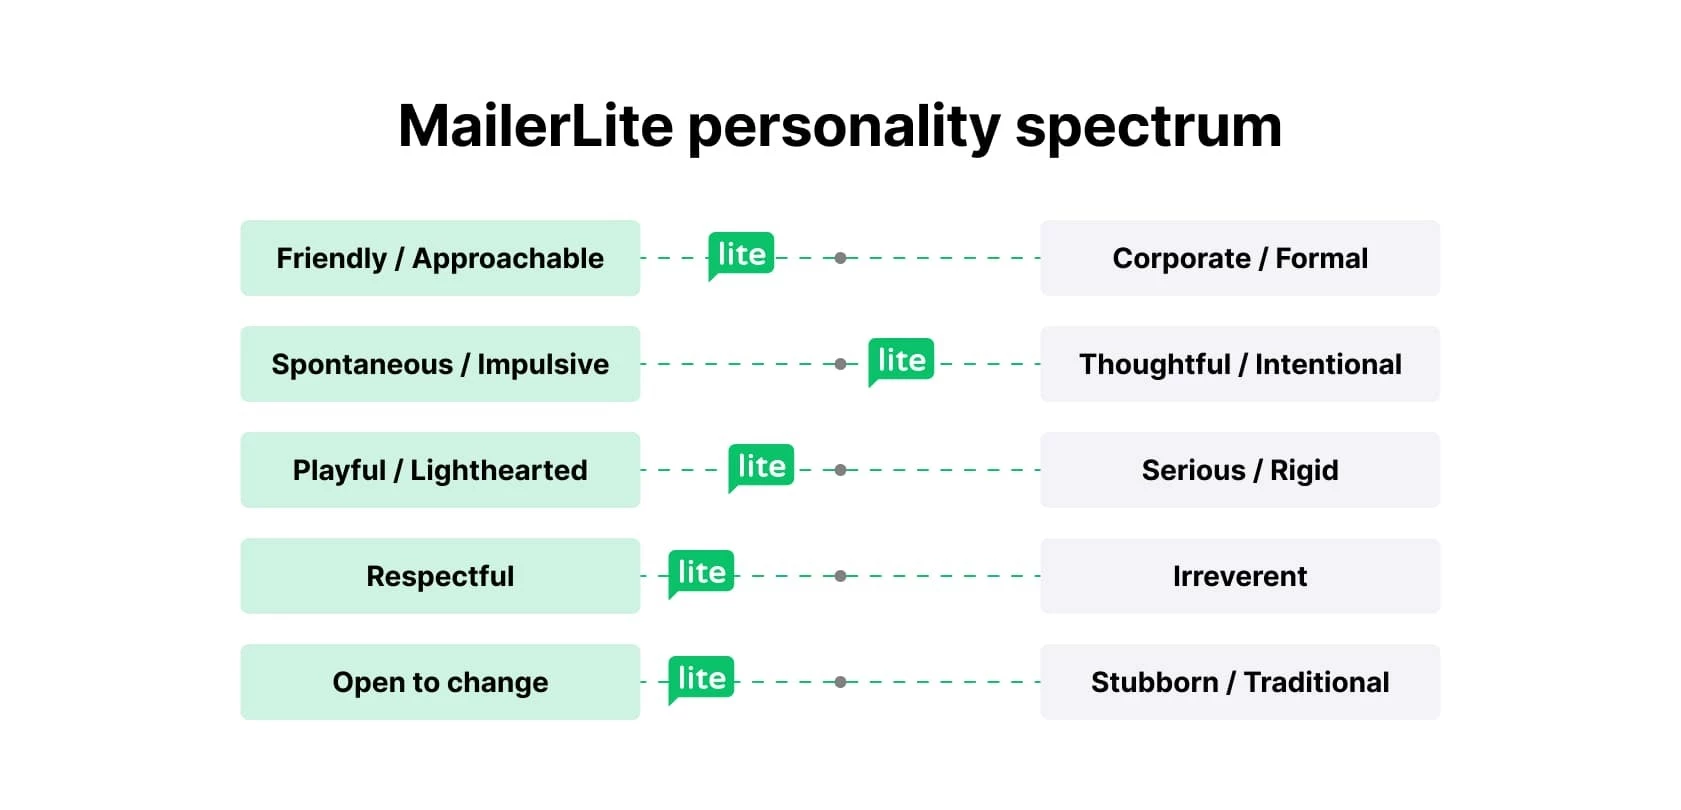 MailerLite communication personality spectrum